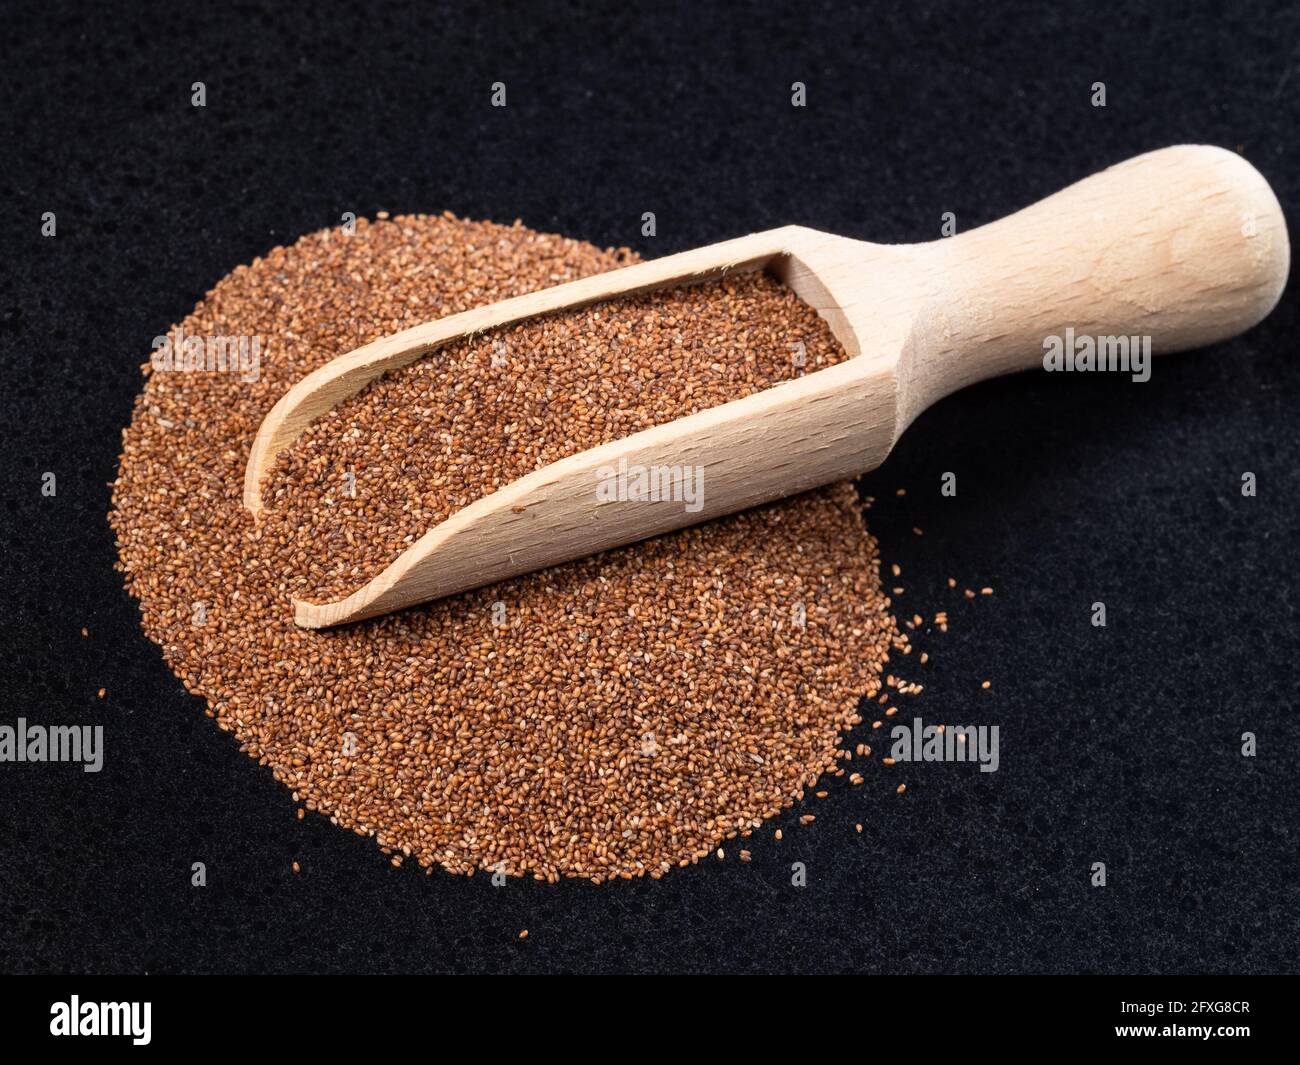 wooden scoop on pile of wholegrain teff seeds on black plate Stock Photo